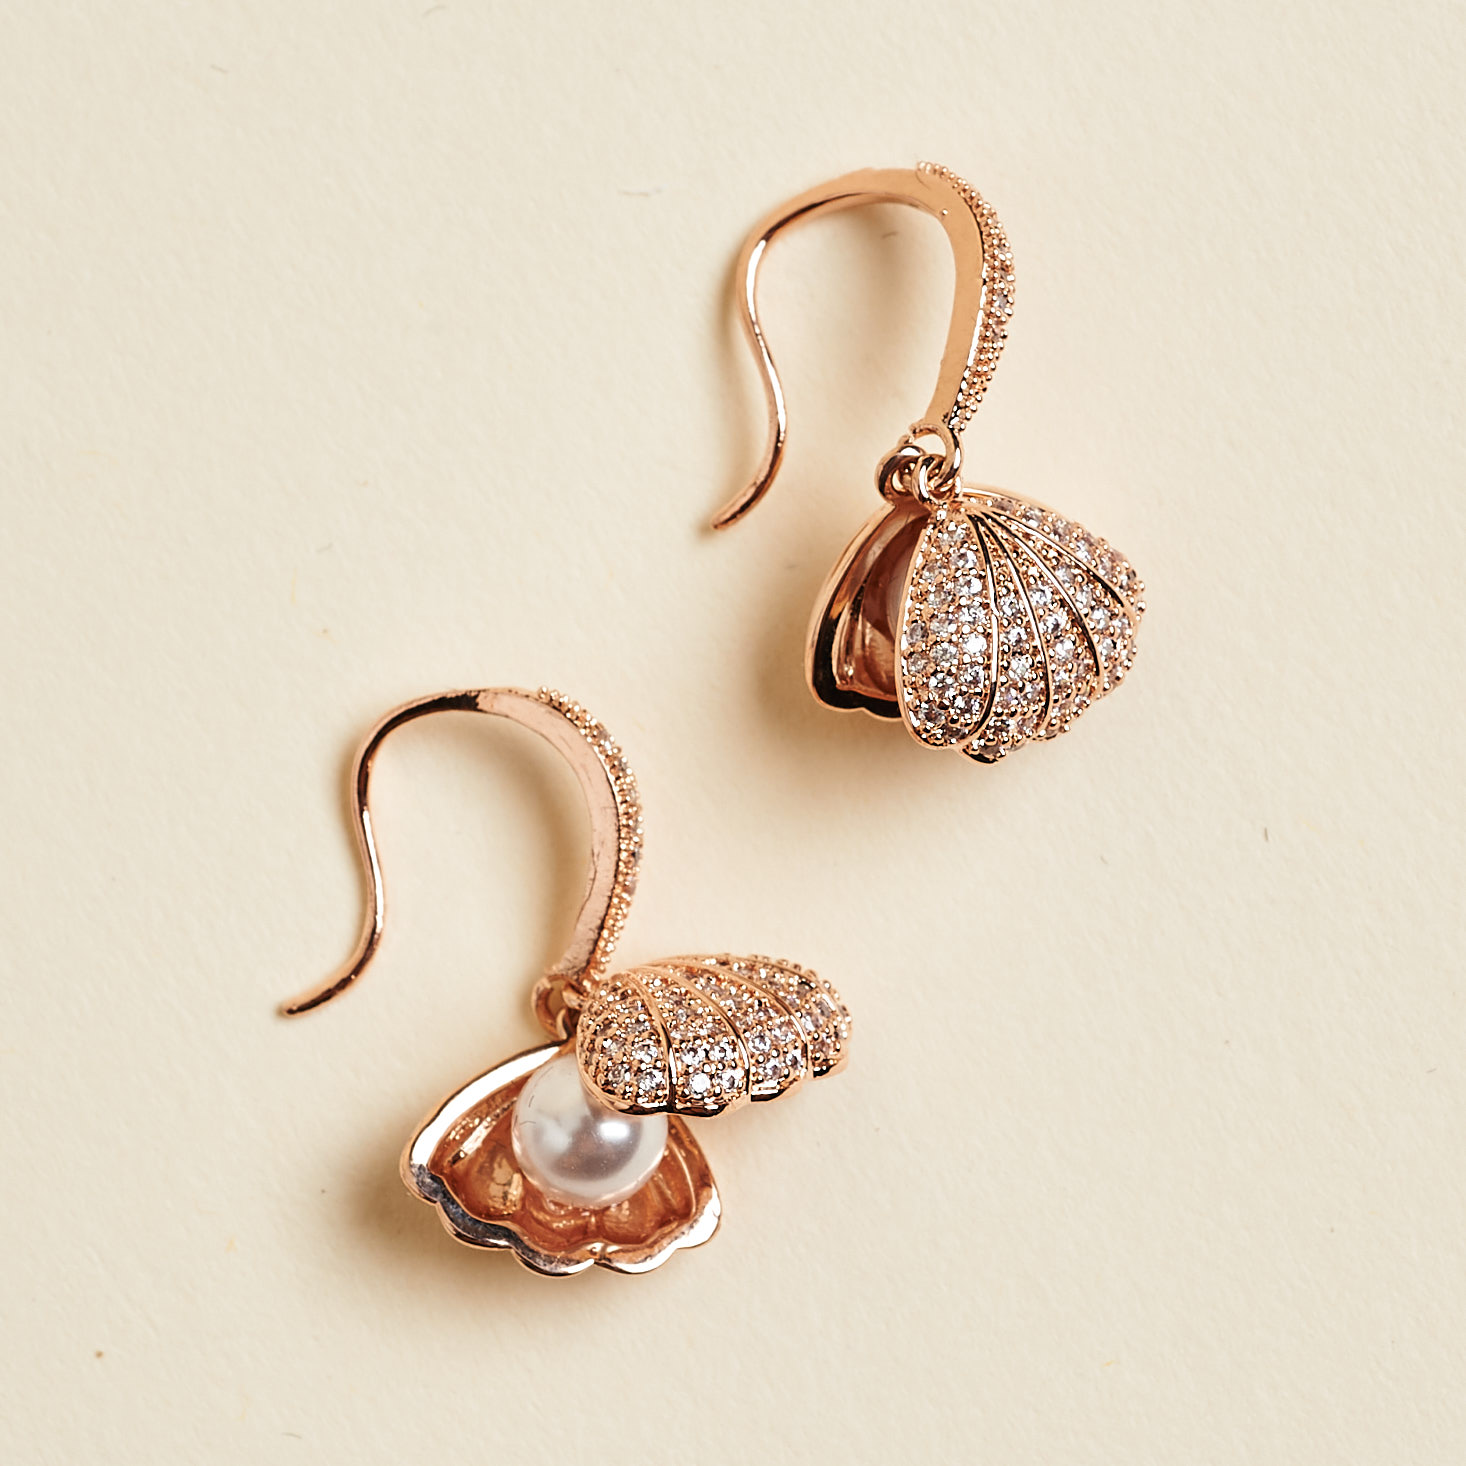 Heart and Honey June 2019 review shell earrings